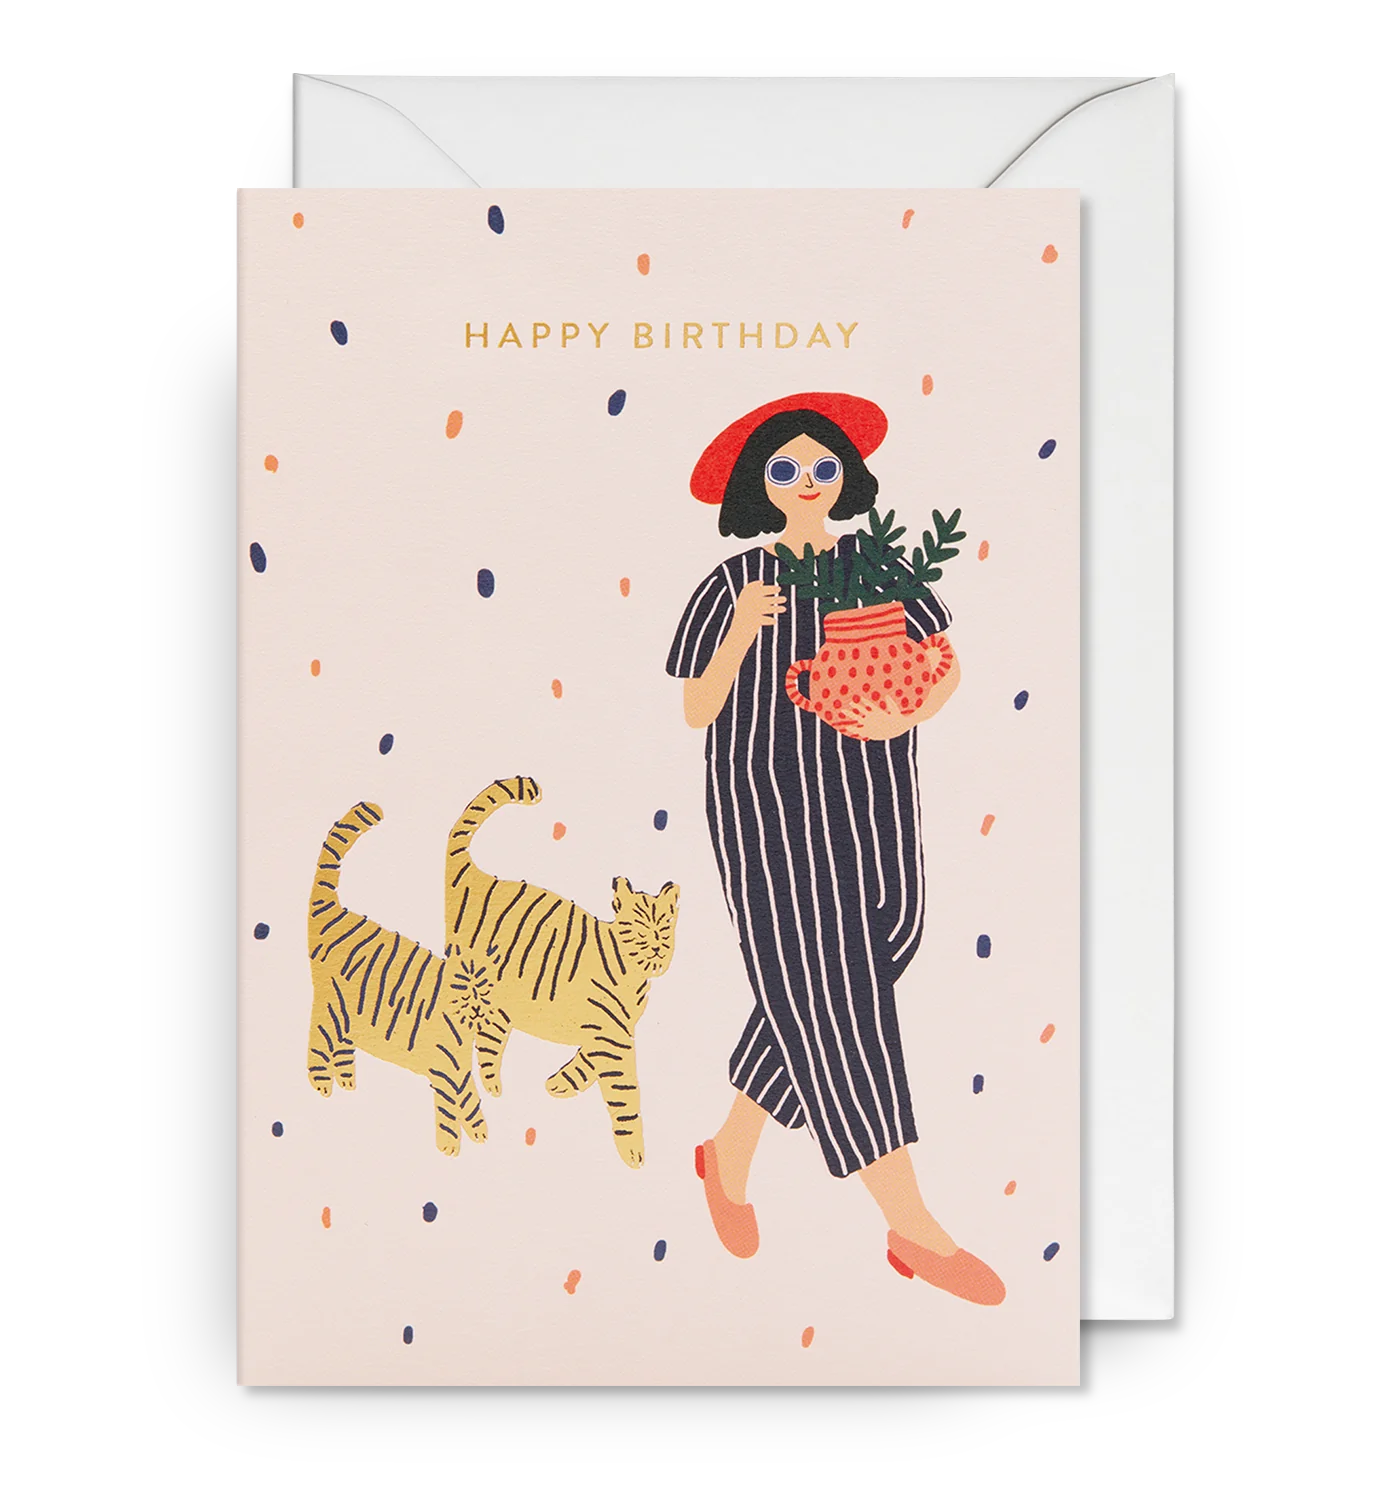 Happy Birthday Cats Birthday Card